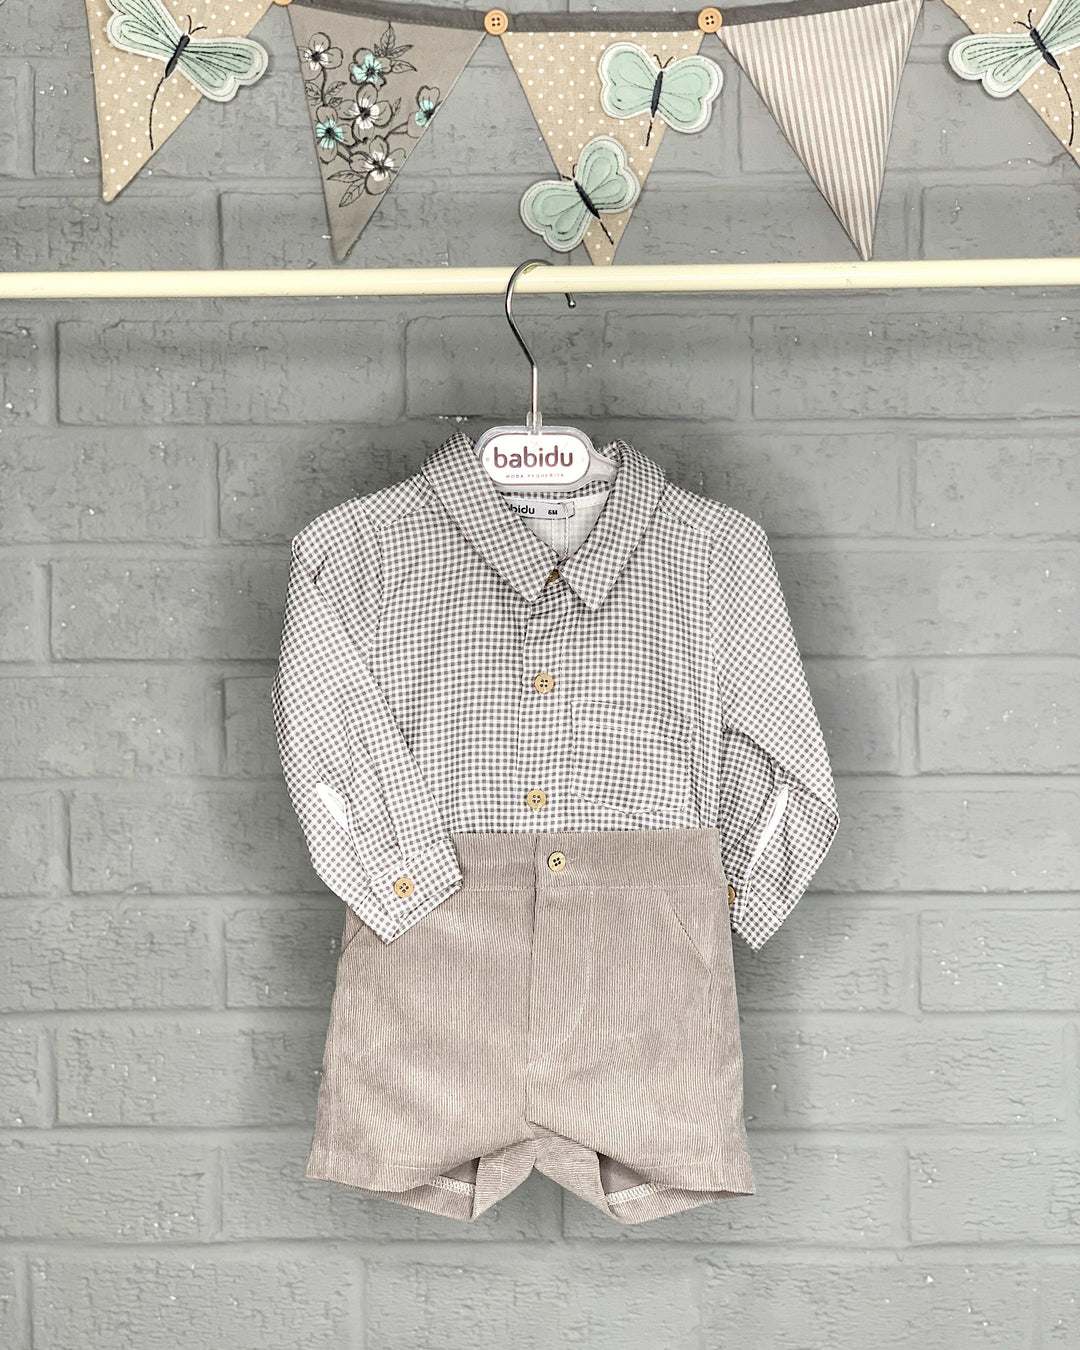 Babidu Grey Gingham Shirt & Shorts | Millie and John